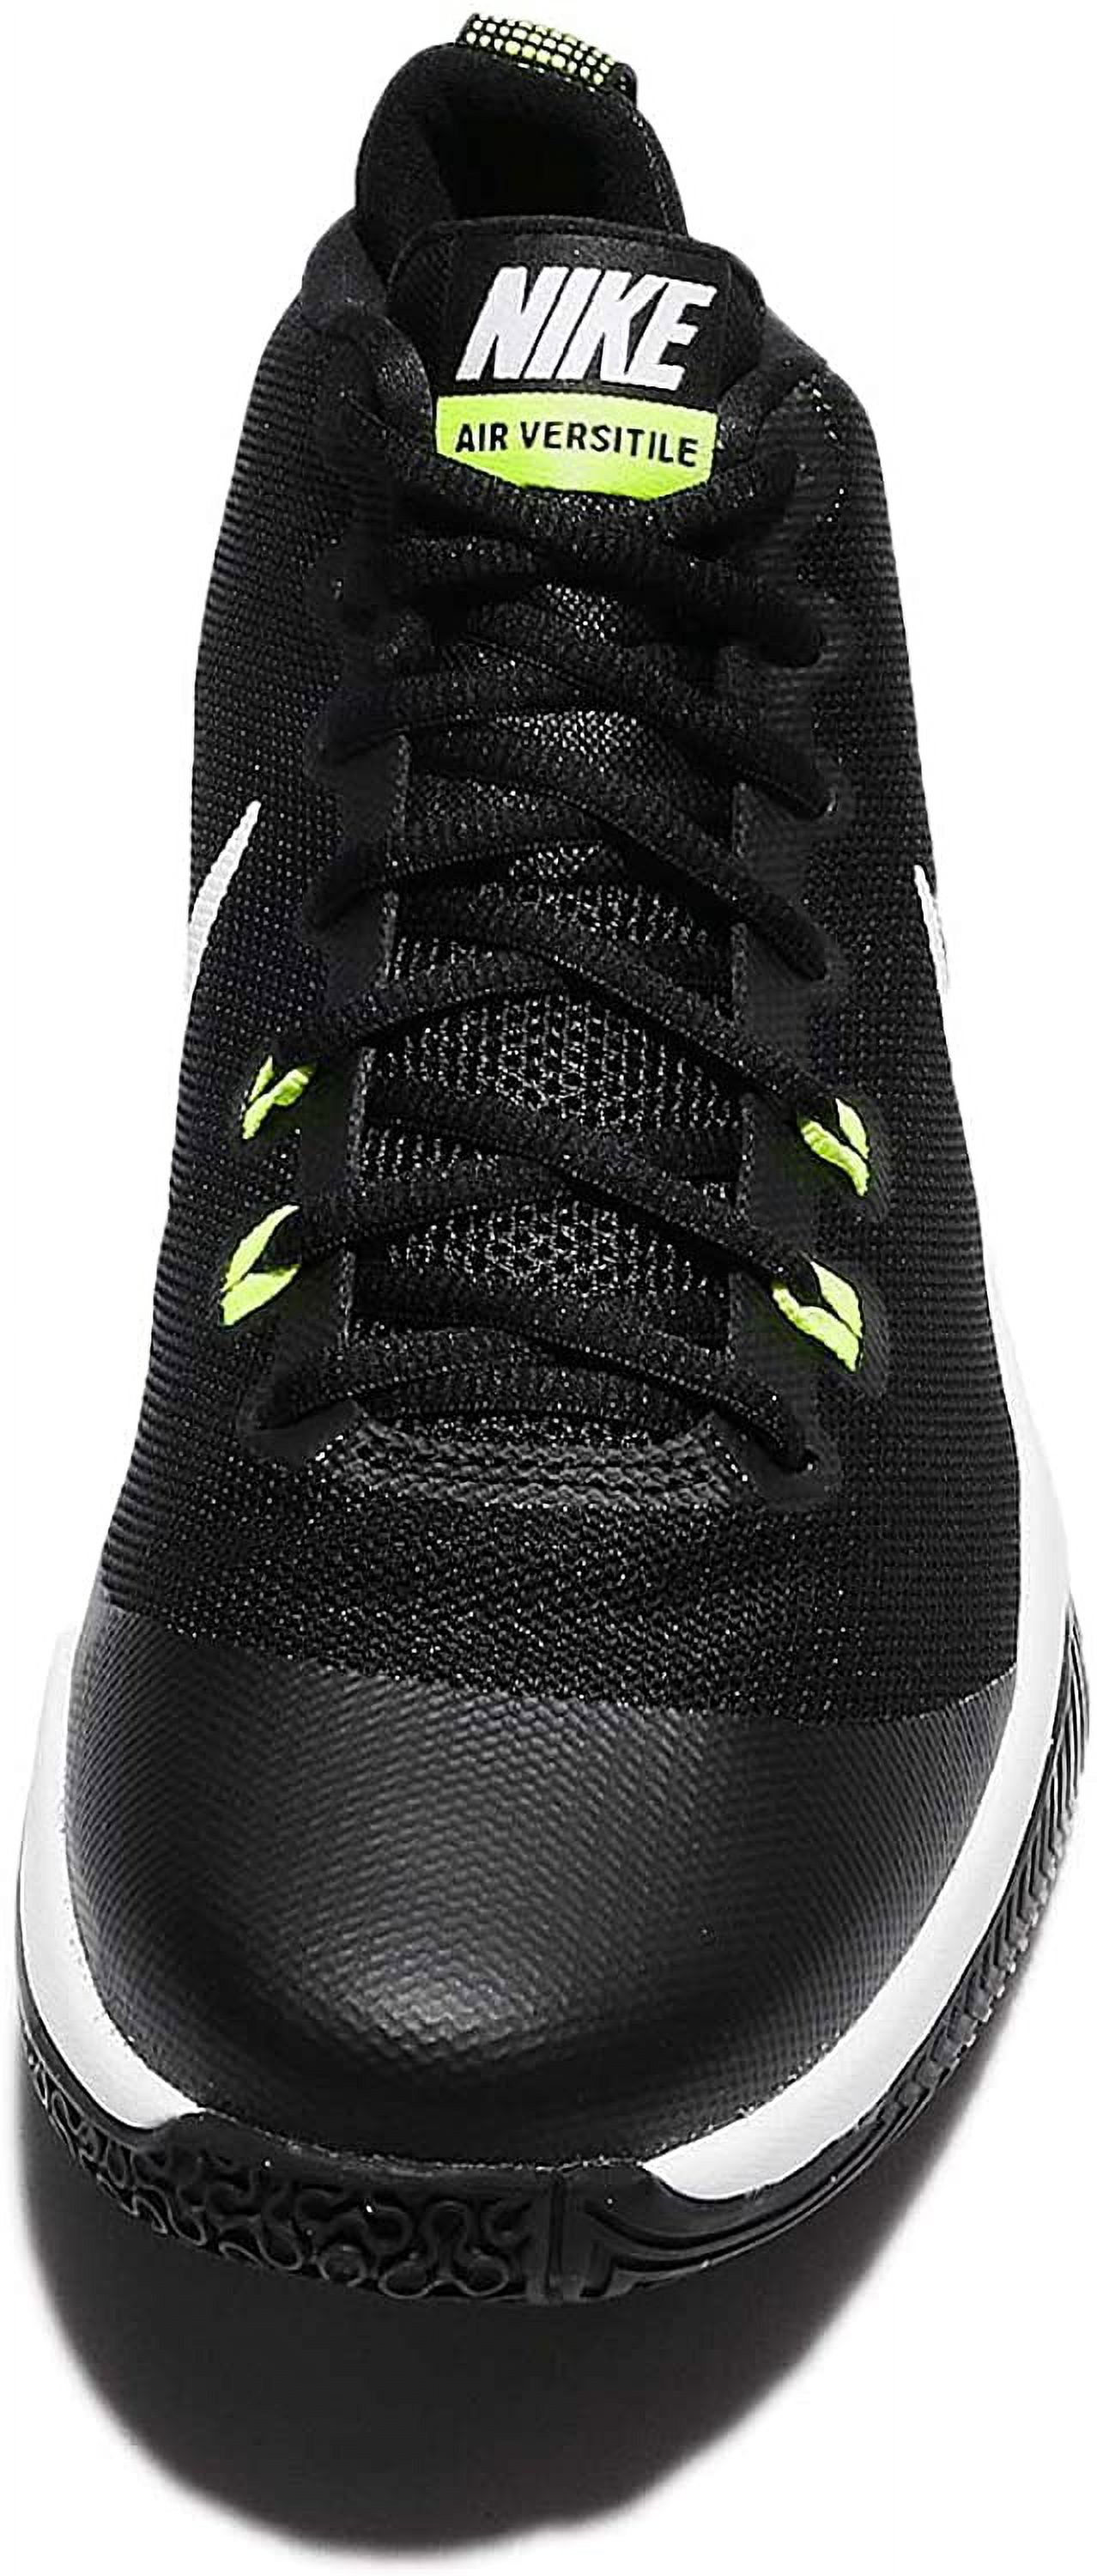 NIKE Men's Air Versitile Nbk Basketball-Shoes - image 5 of 8